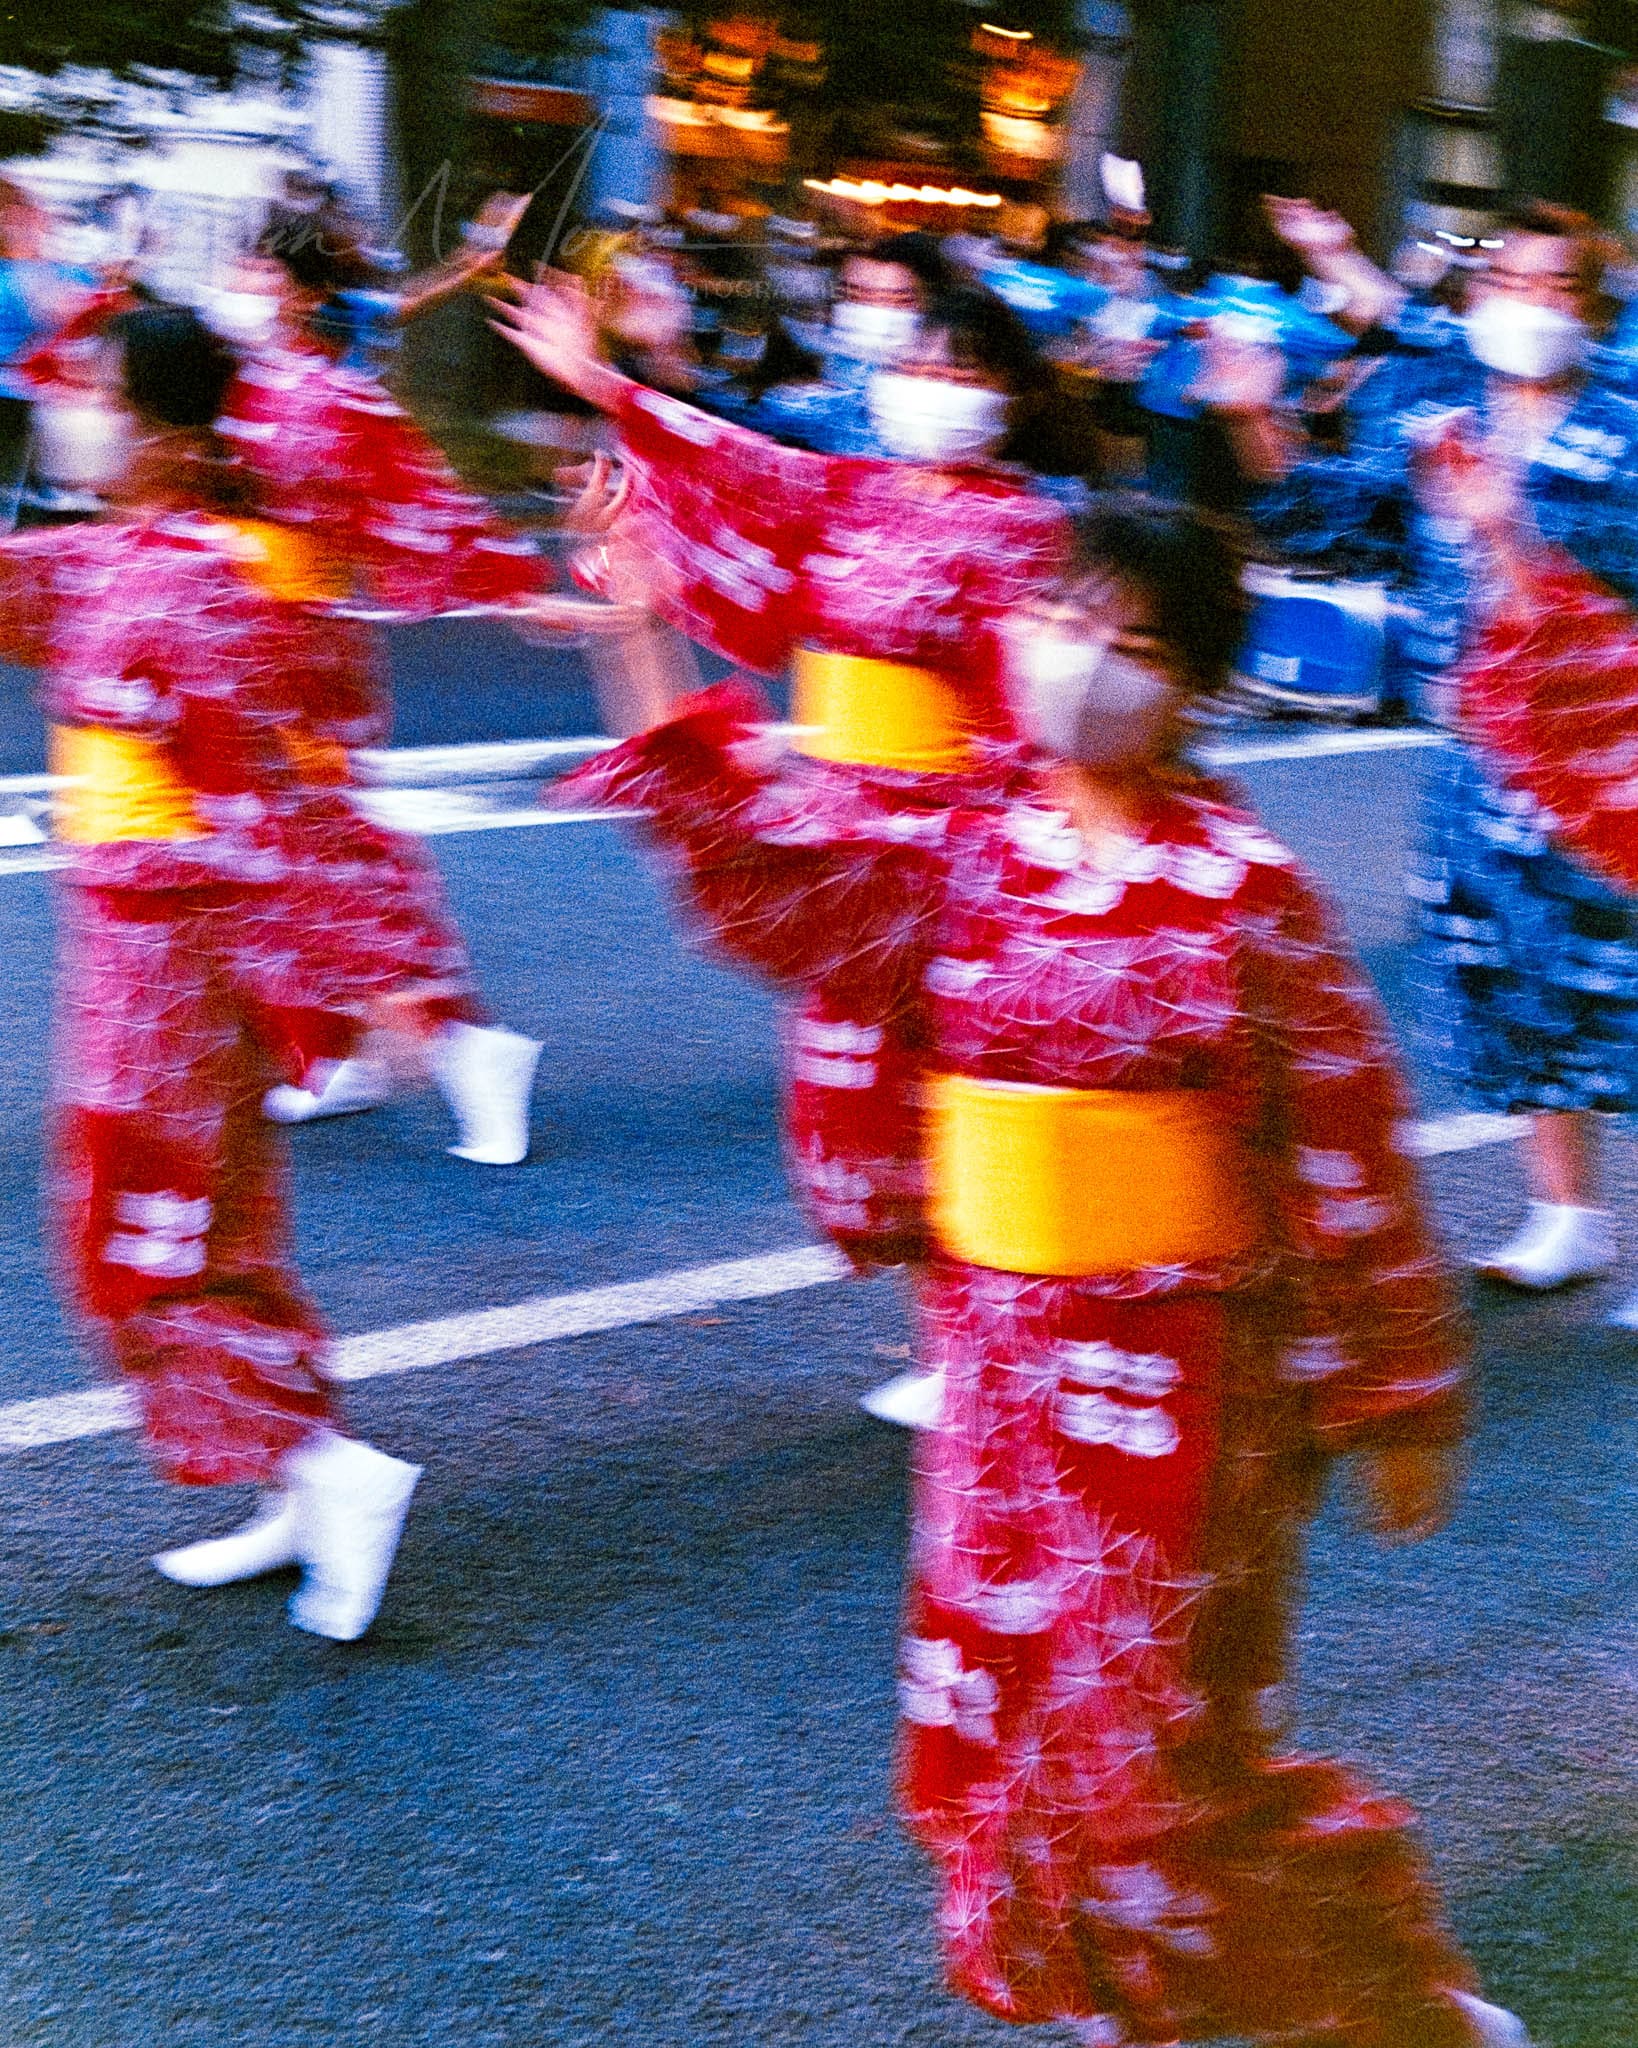 Japanese festival dancers in vibrant yukatas performing synchronized dance in urban setting.